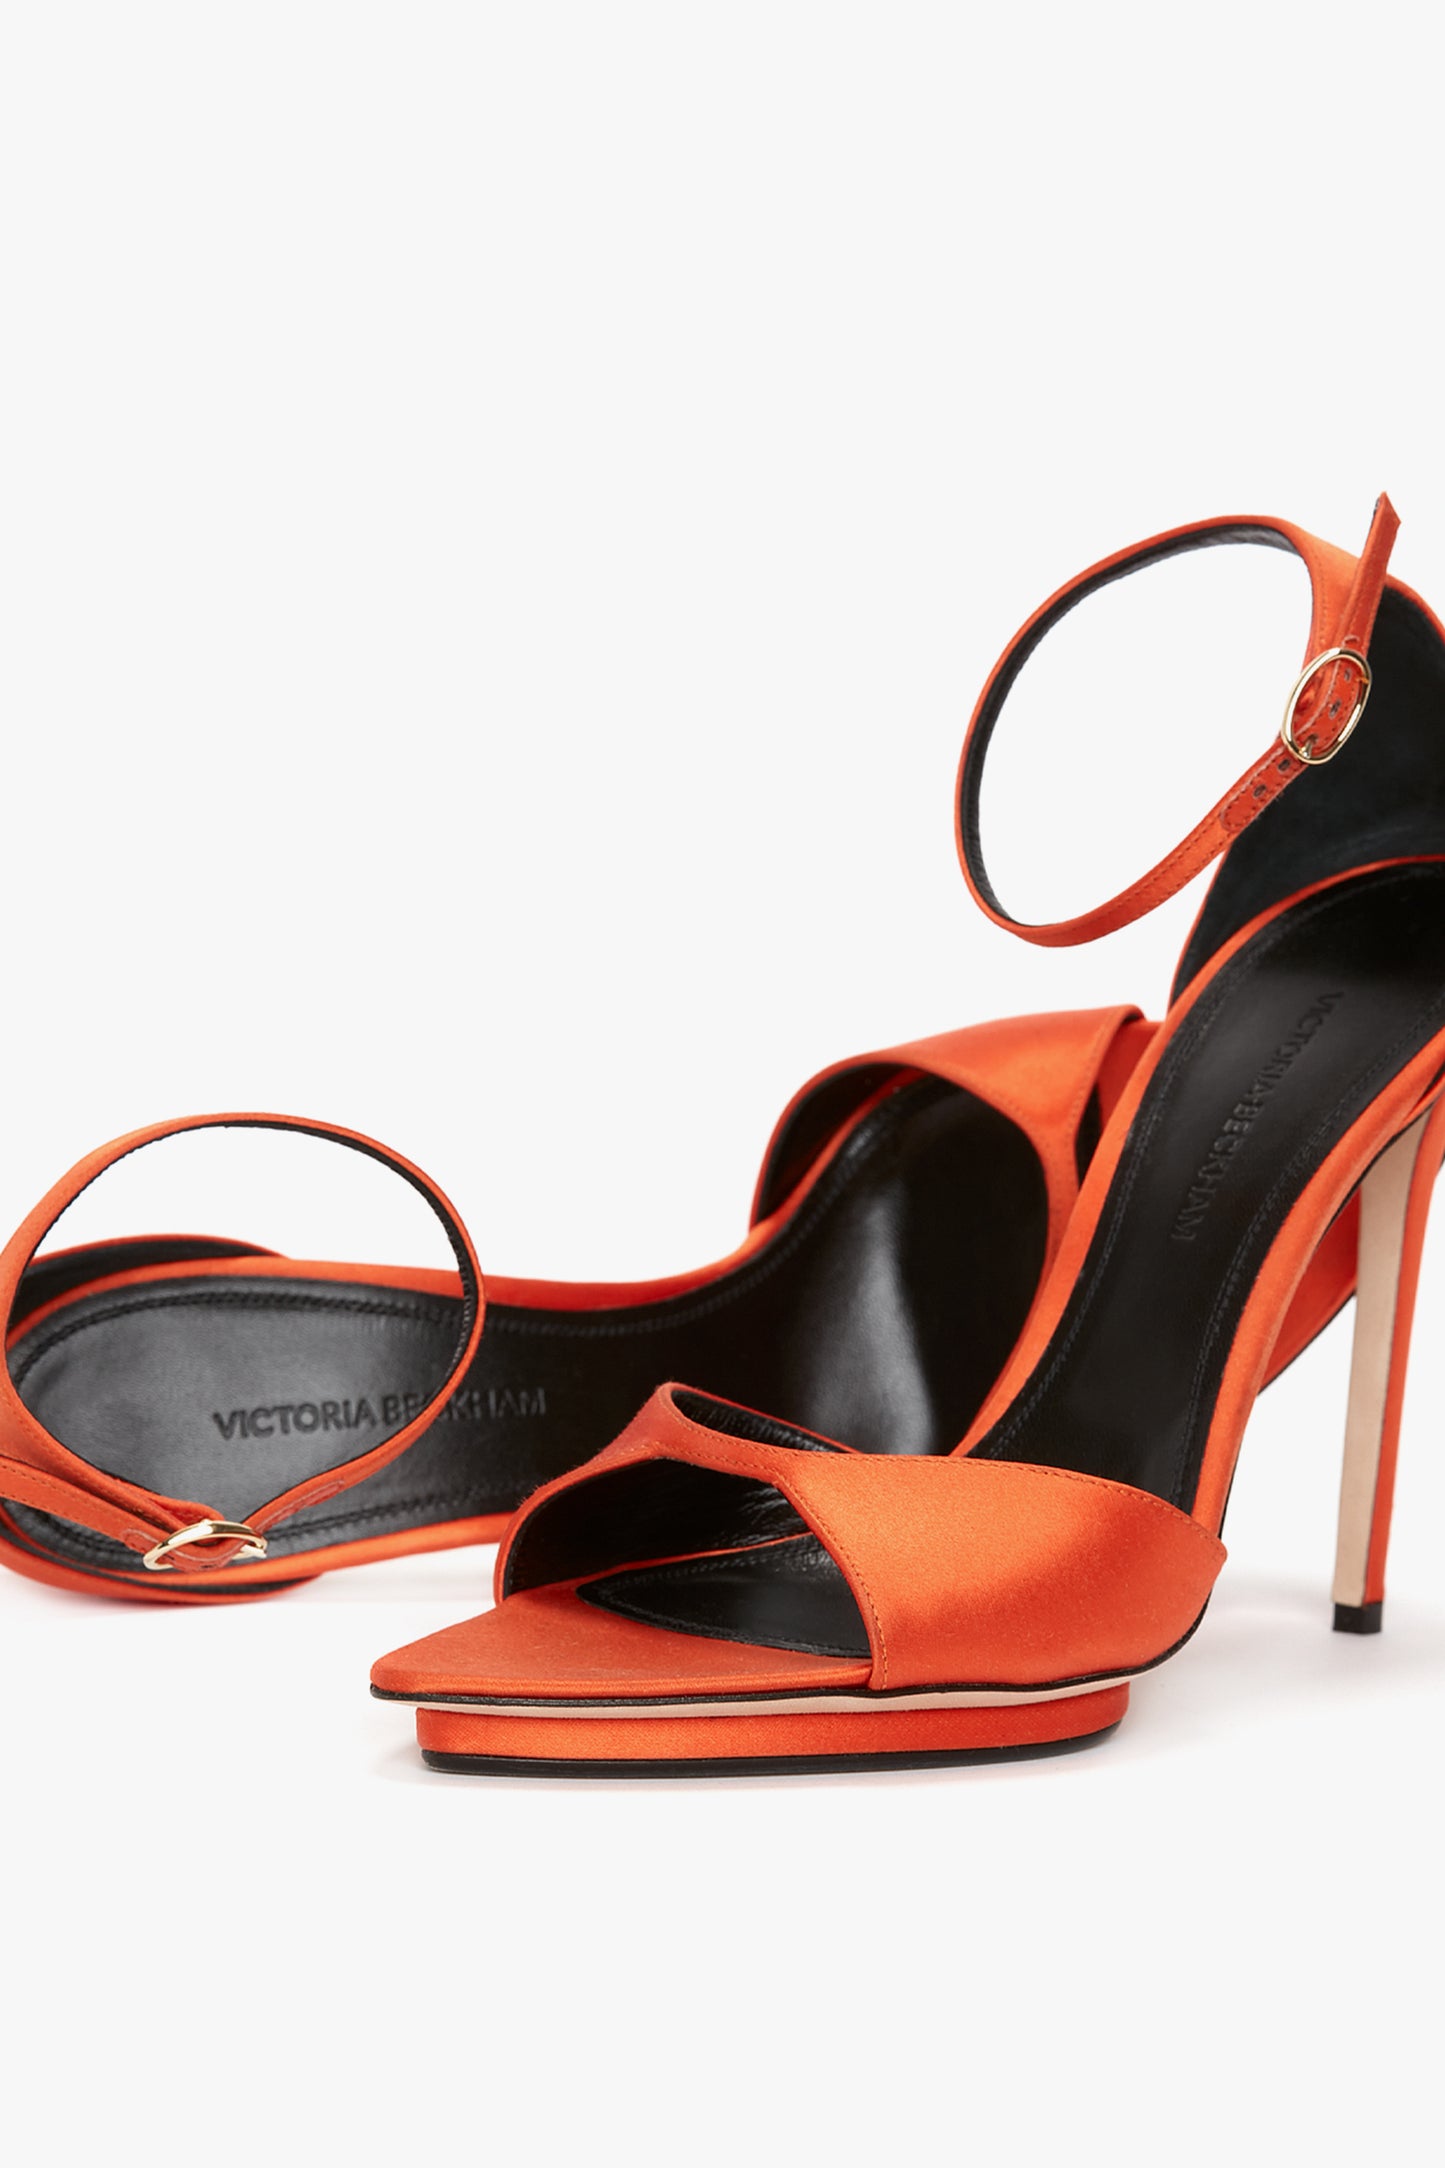 Tan Pink & Orange Strappy Heels | Pink heels, Light pink heels, Orange heels